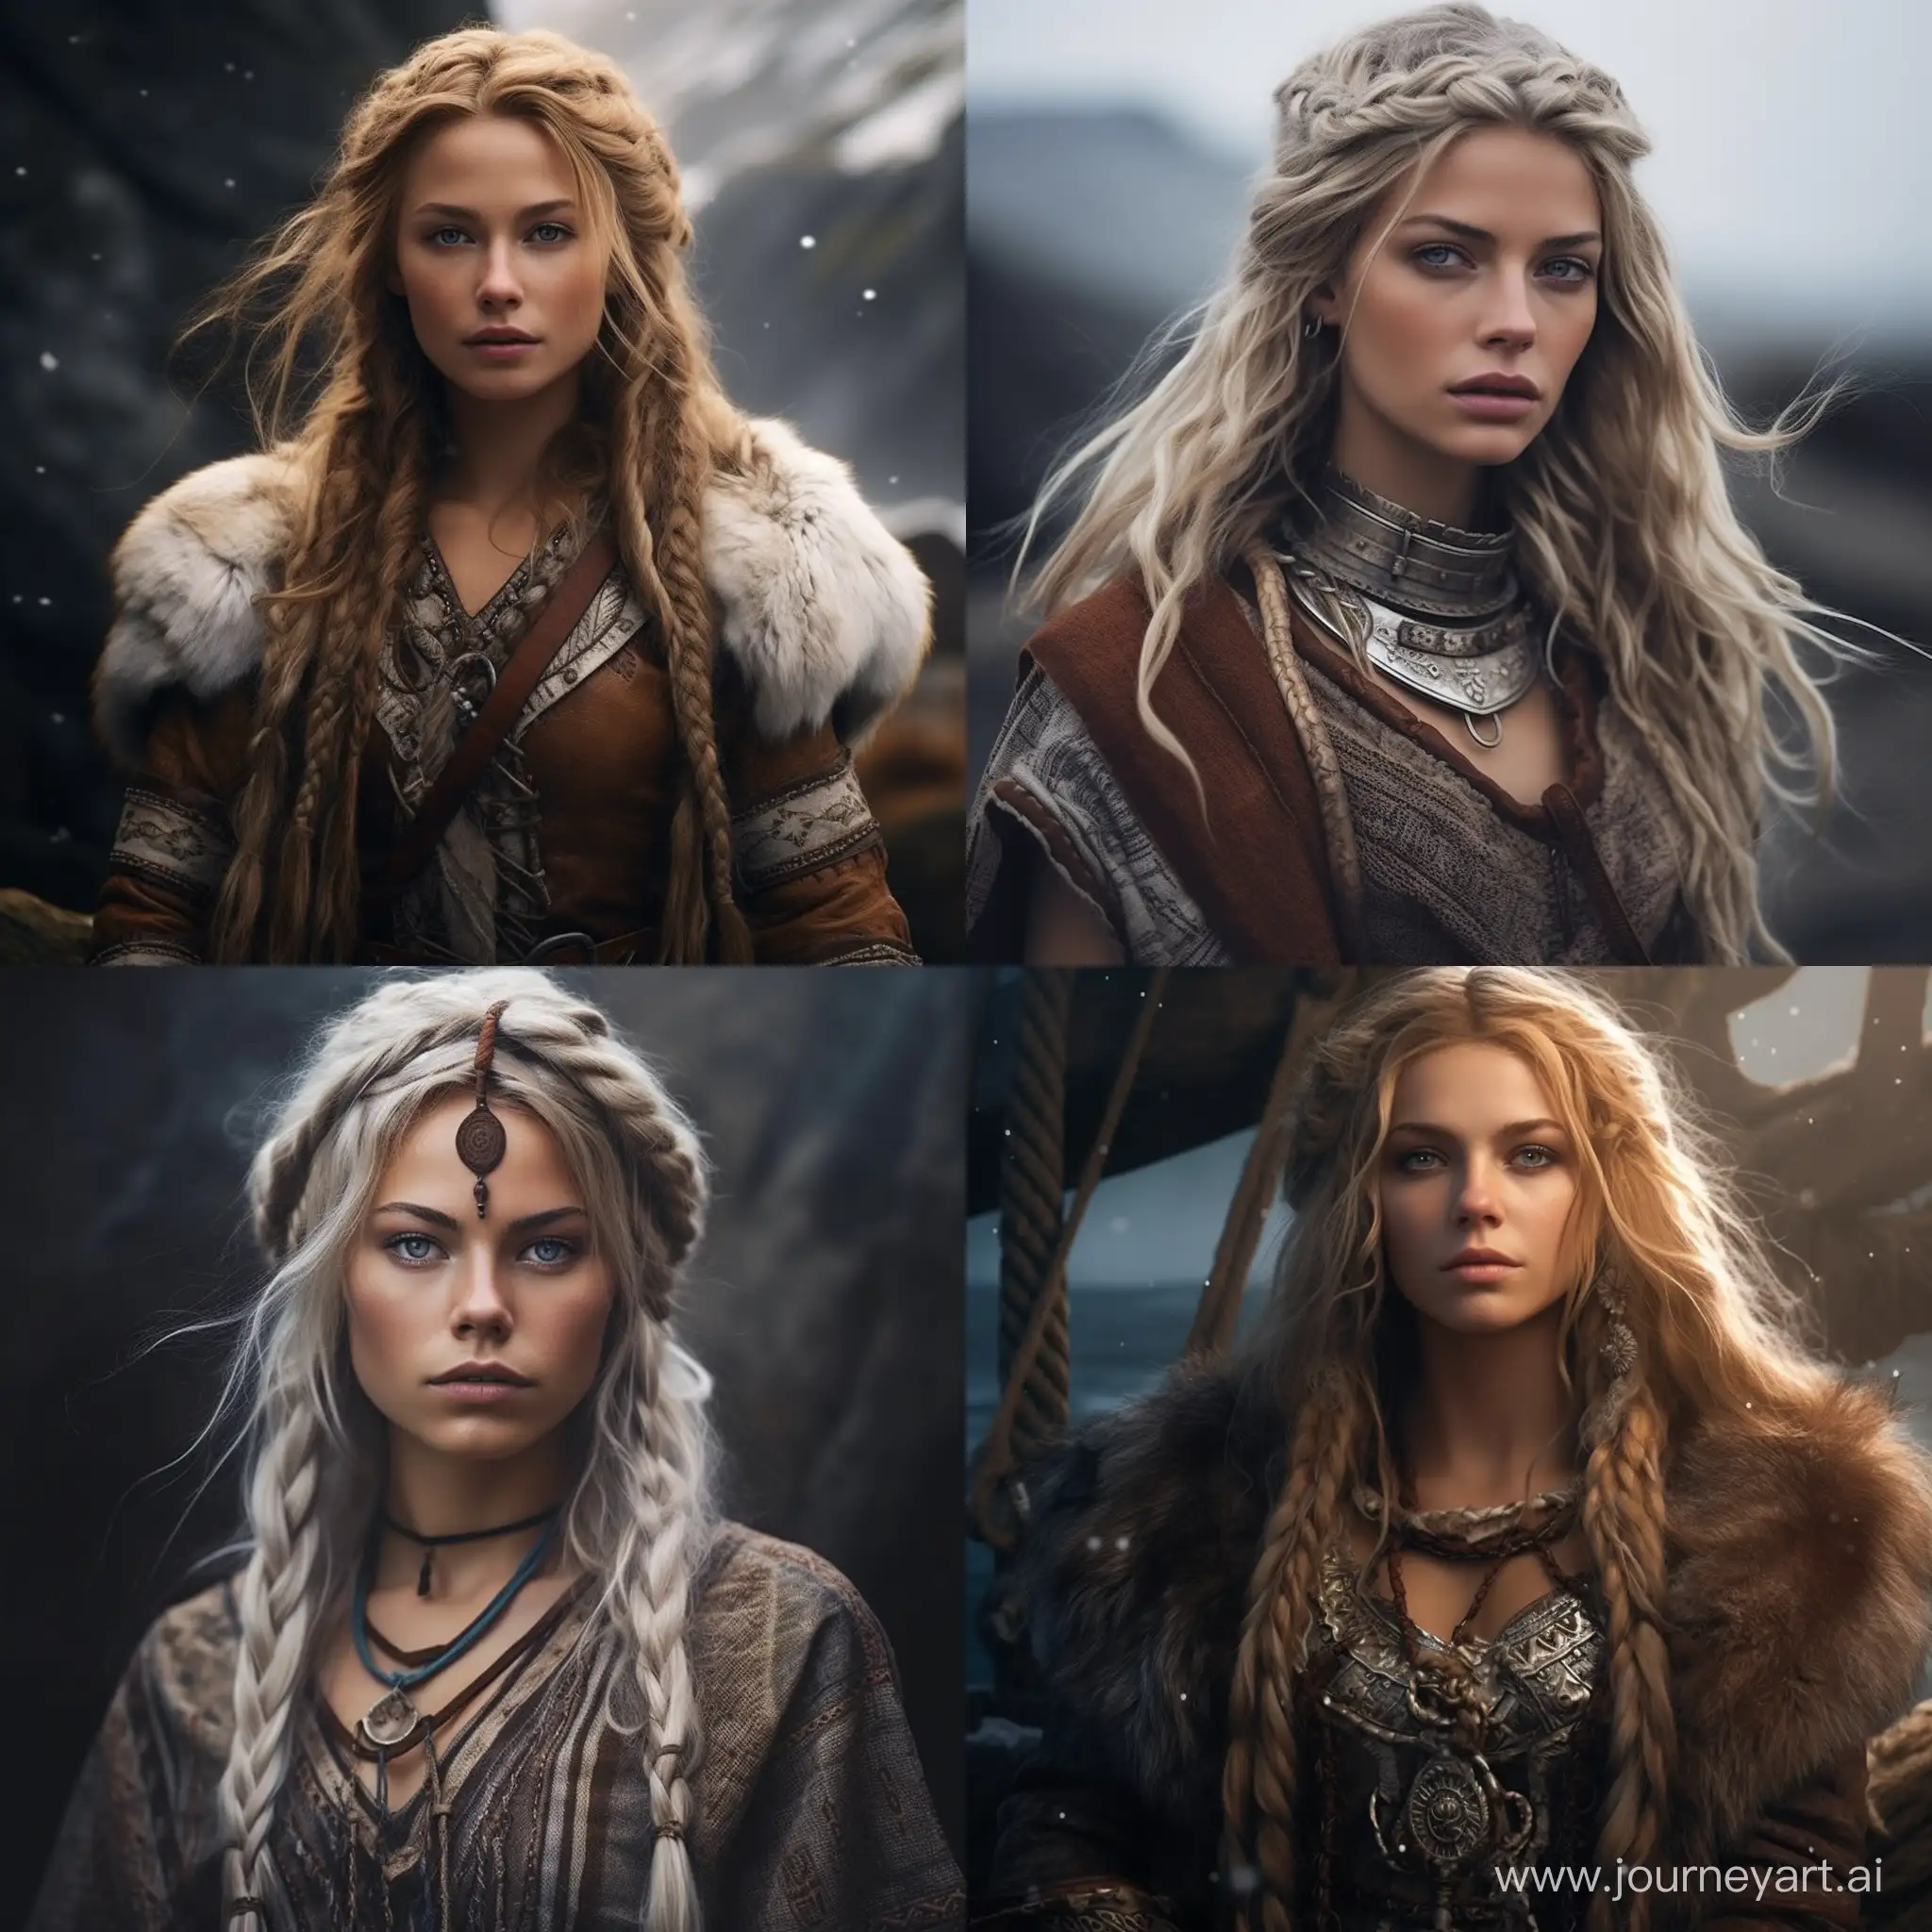 viking woman in Scandinavian's recognizable style